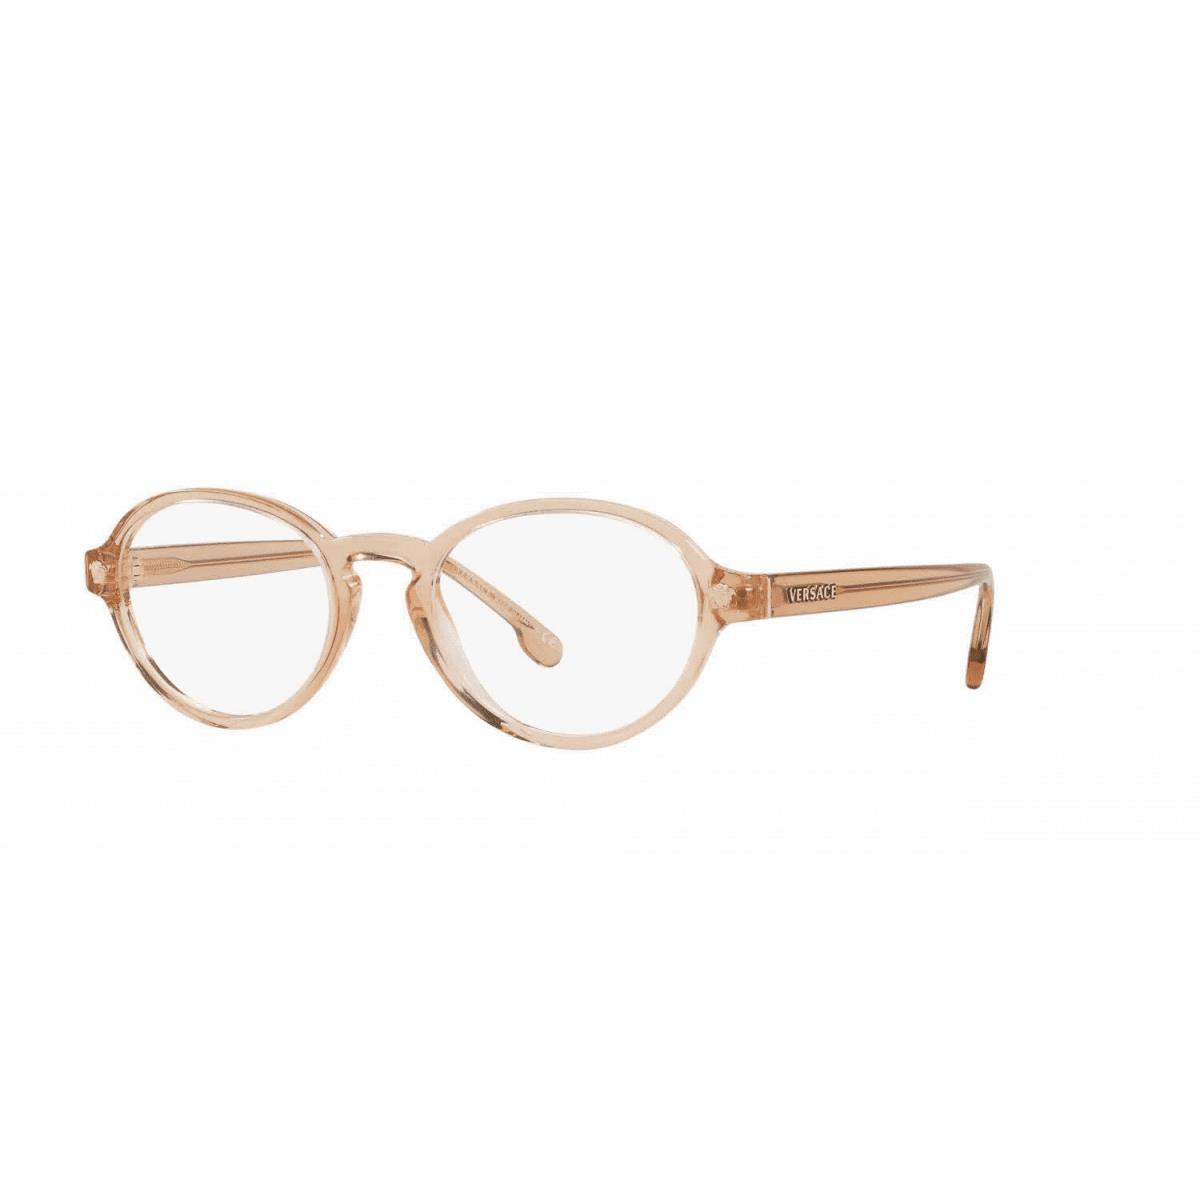 Versace VE3259 5215 Eyeglass Frames Transparent Light Brown New/authentic